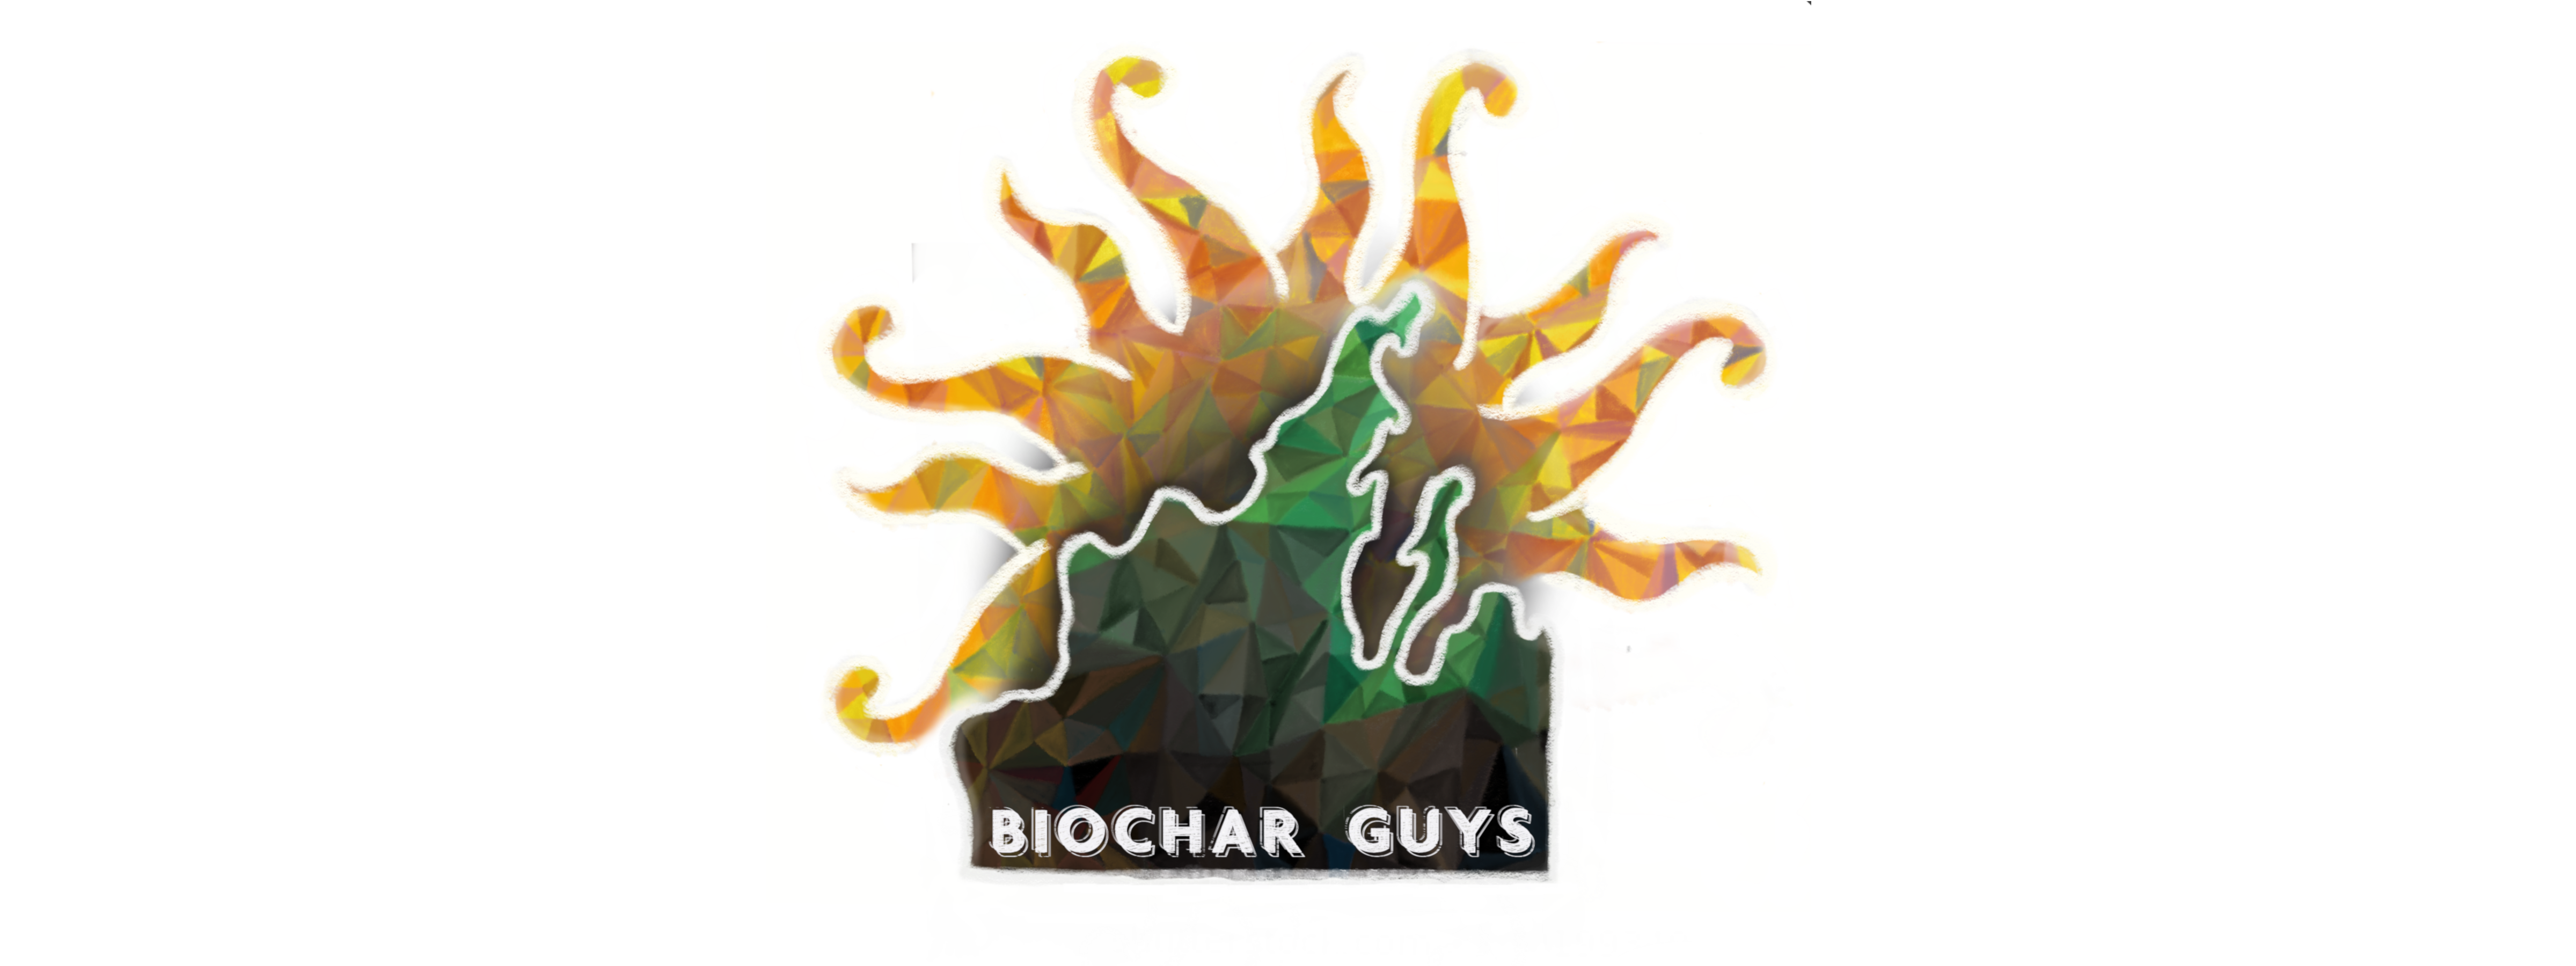 The BioChar Guys